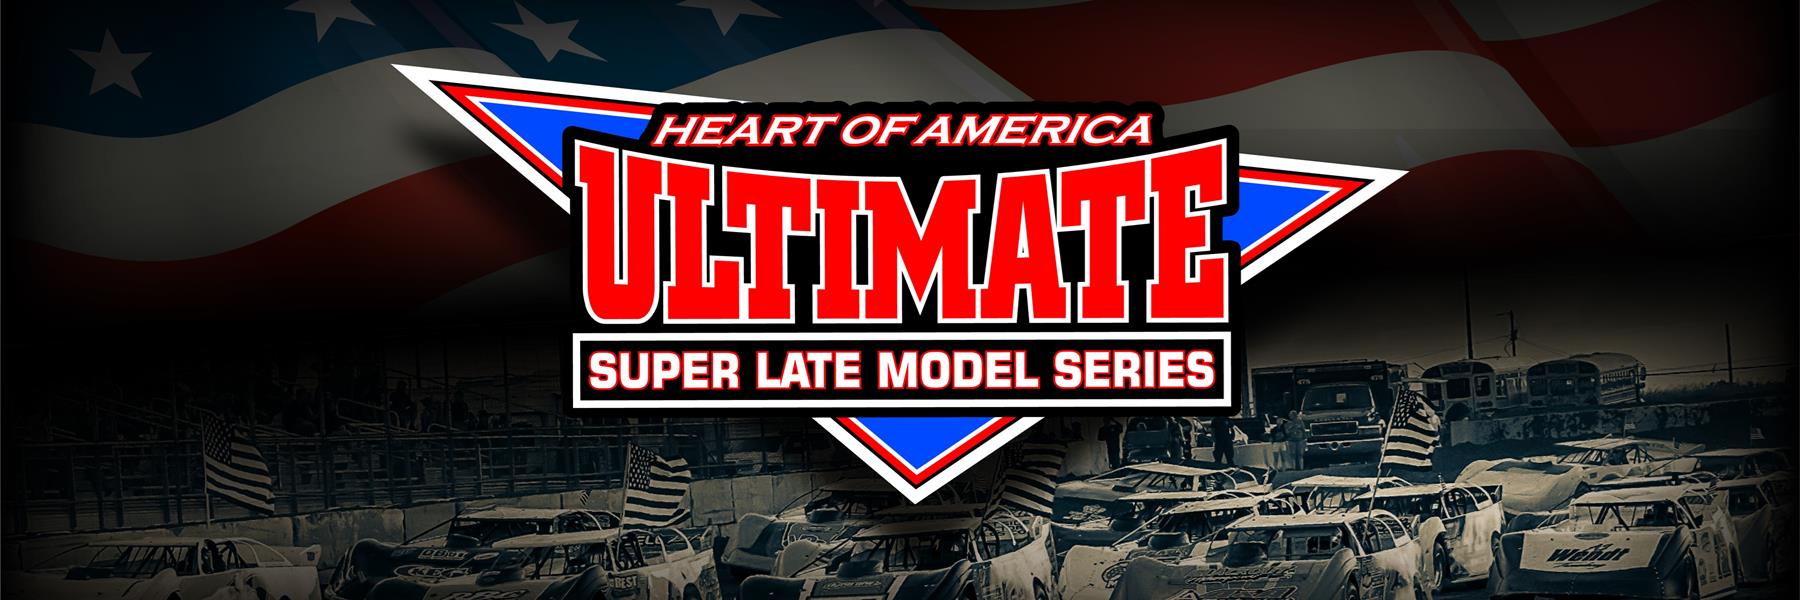 Heart of America Ultimate Super Late Model Series